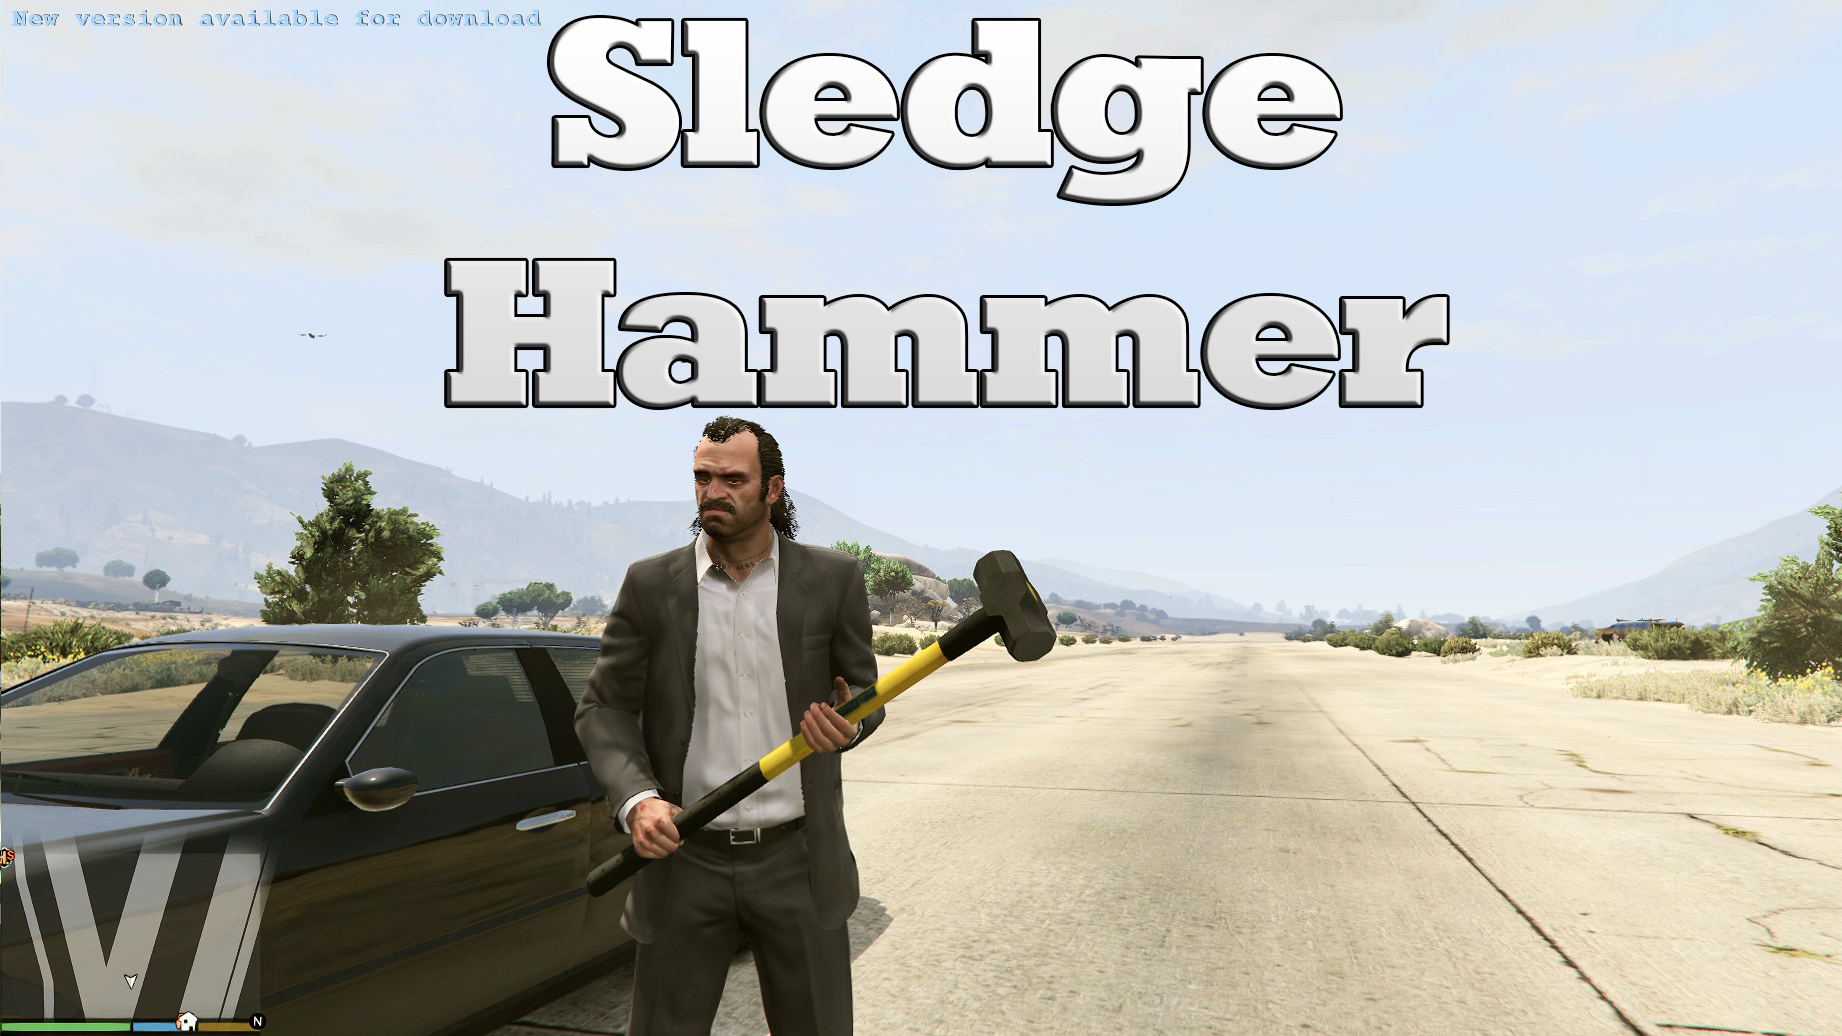 Sledge Hammer - Realistic Damage